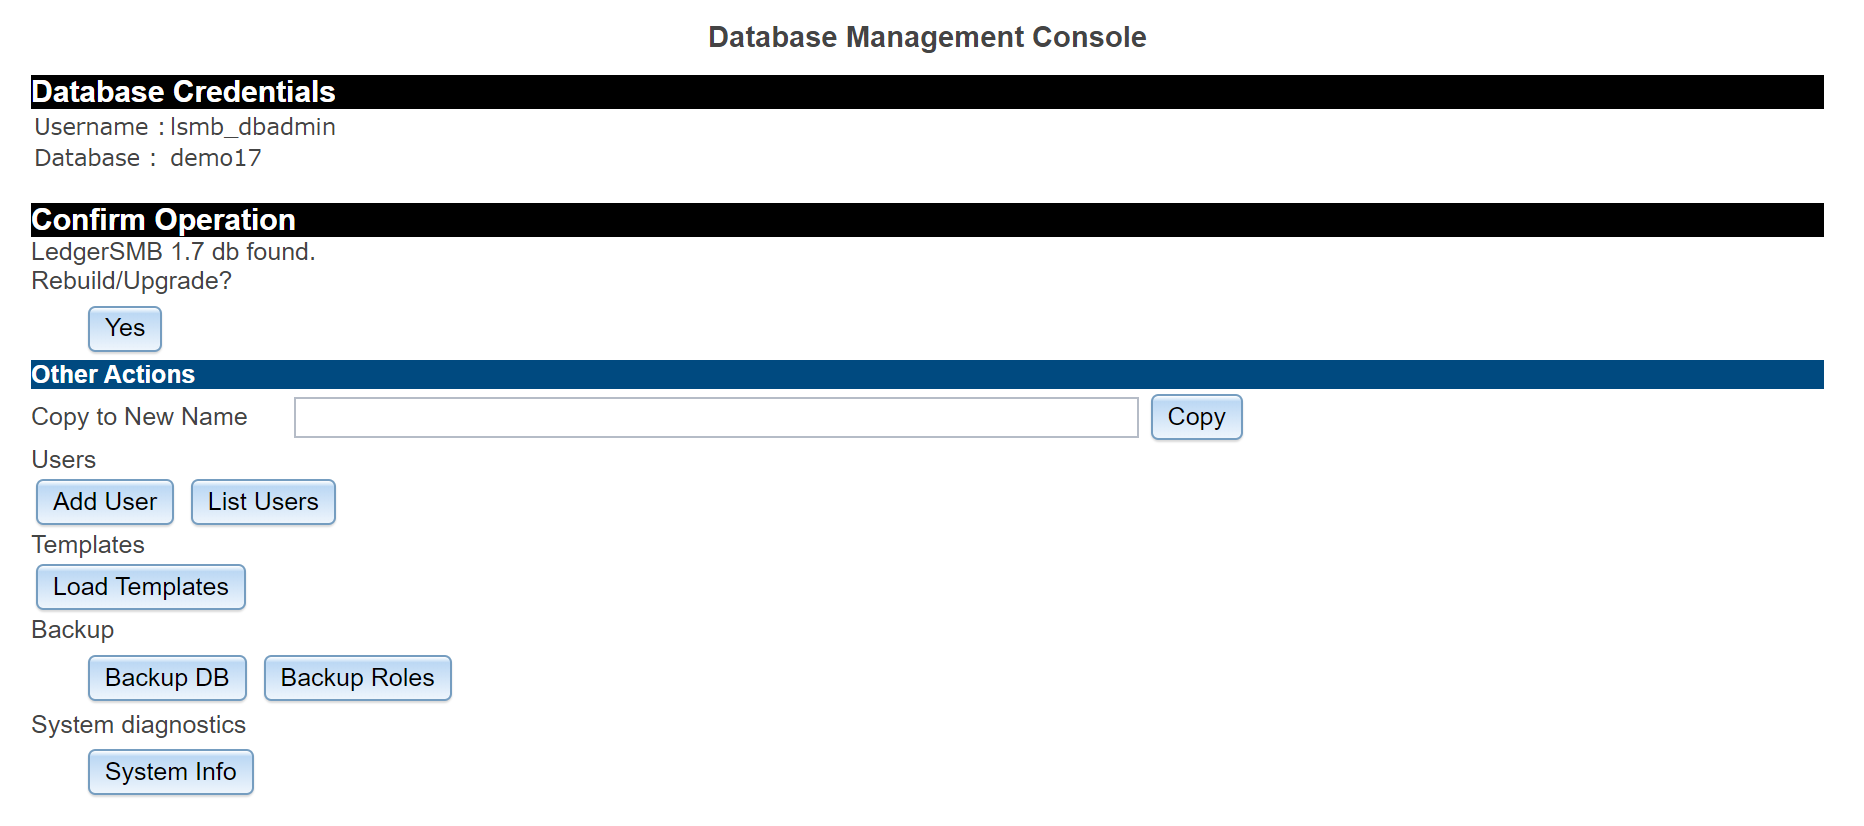 Database management console (setup.pl)